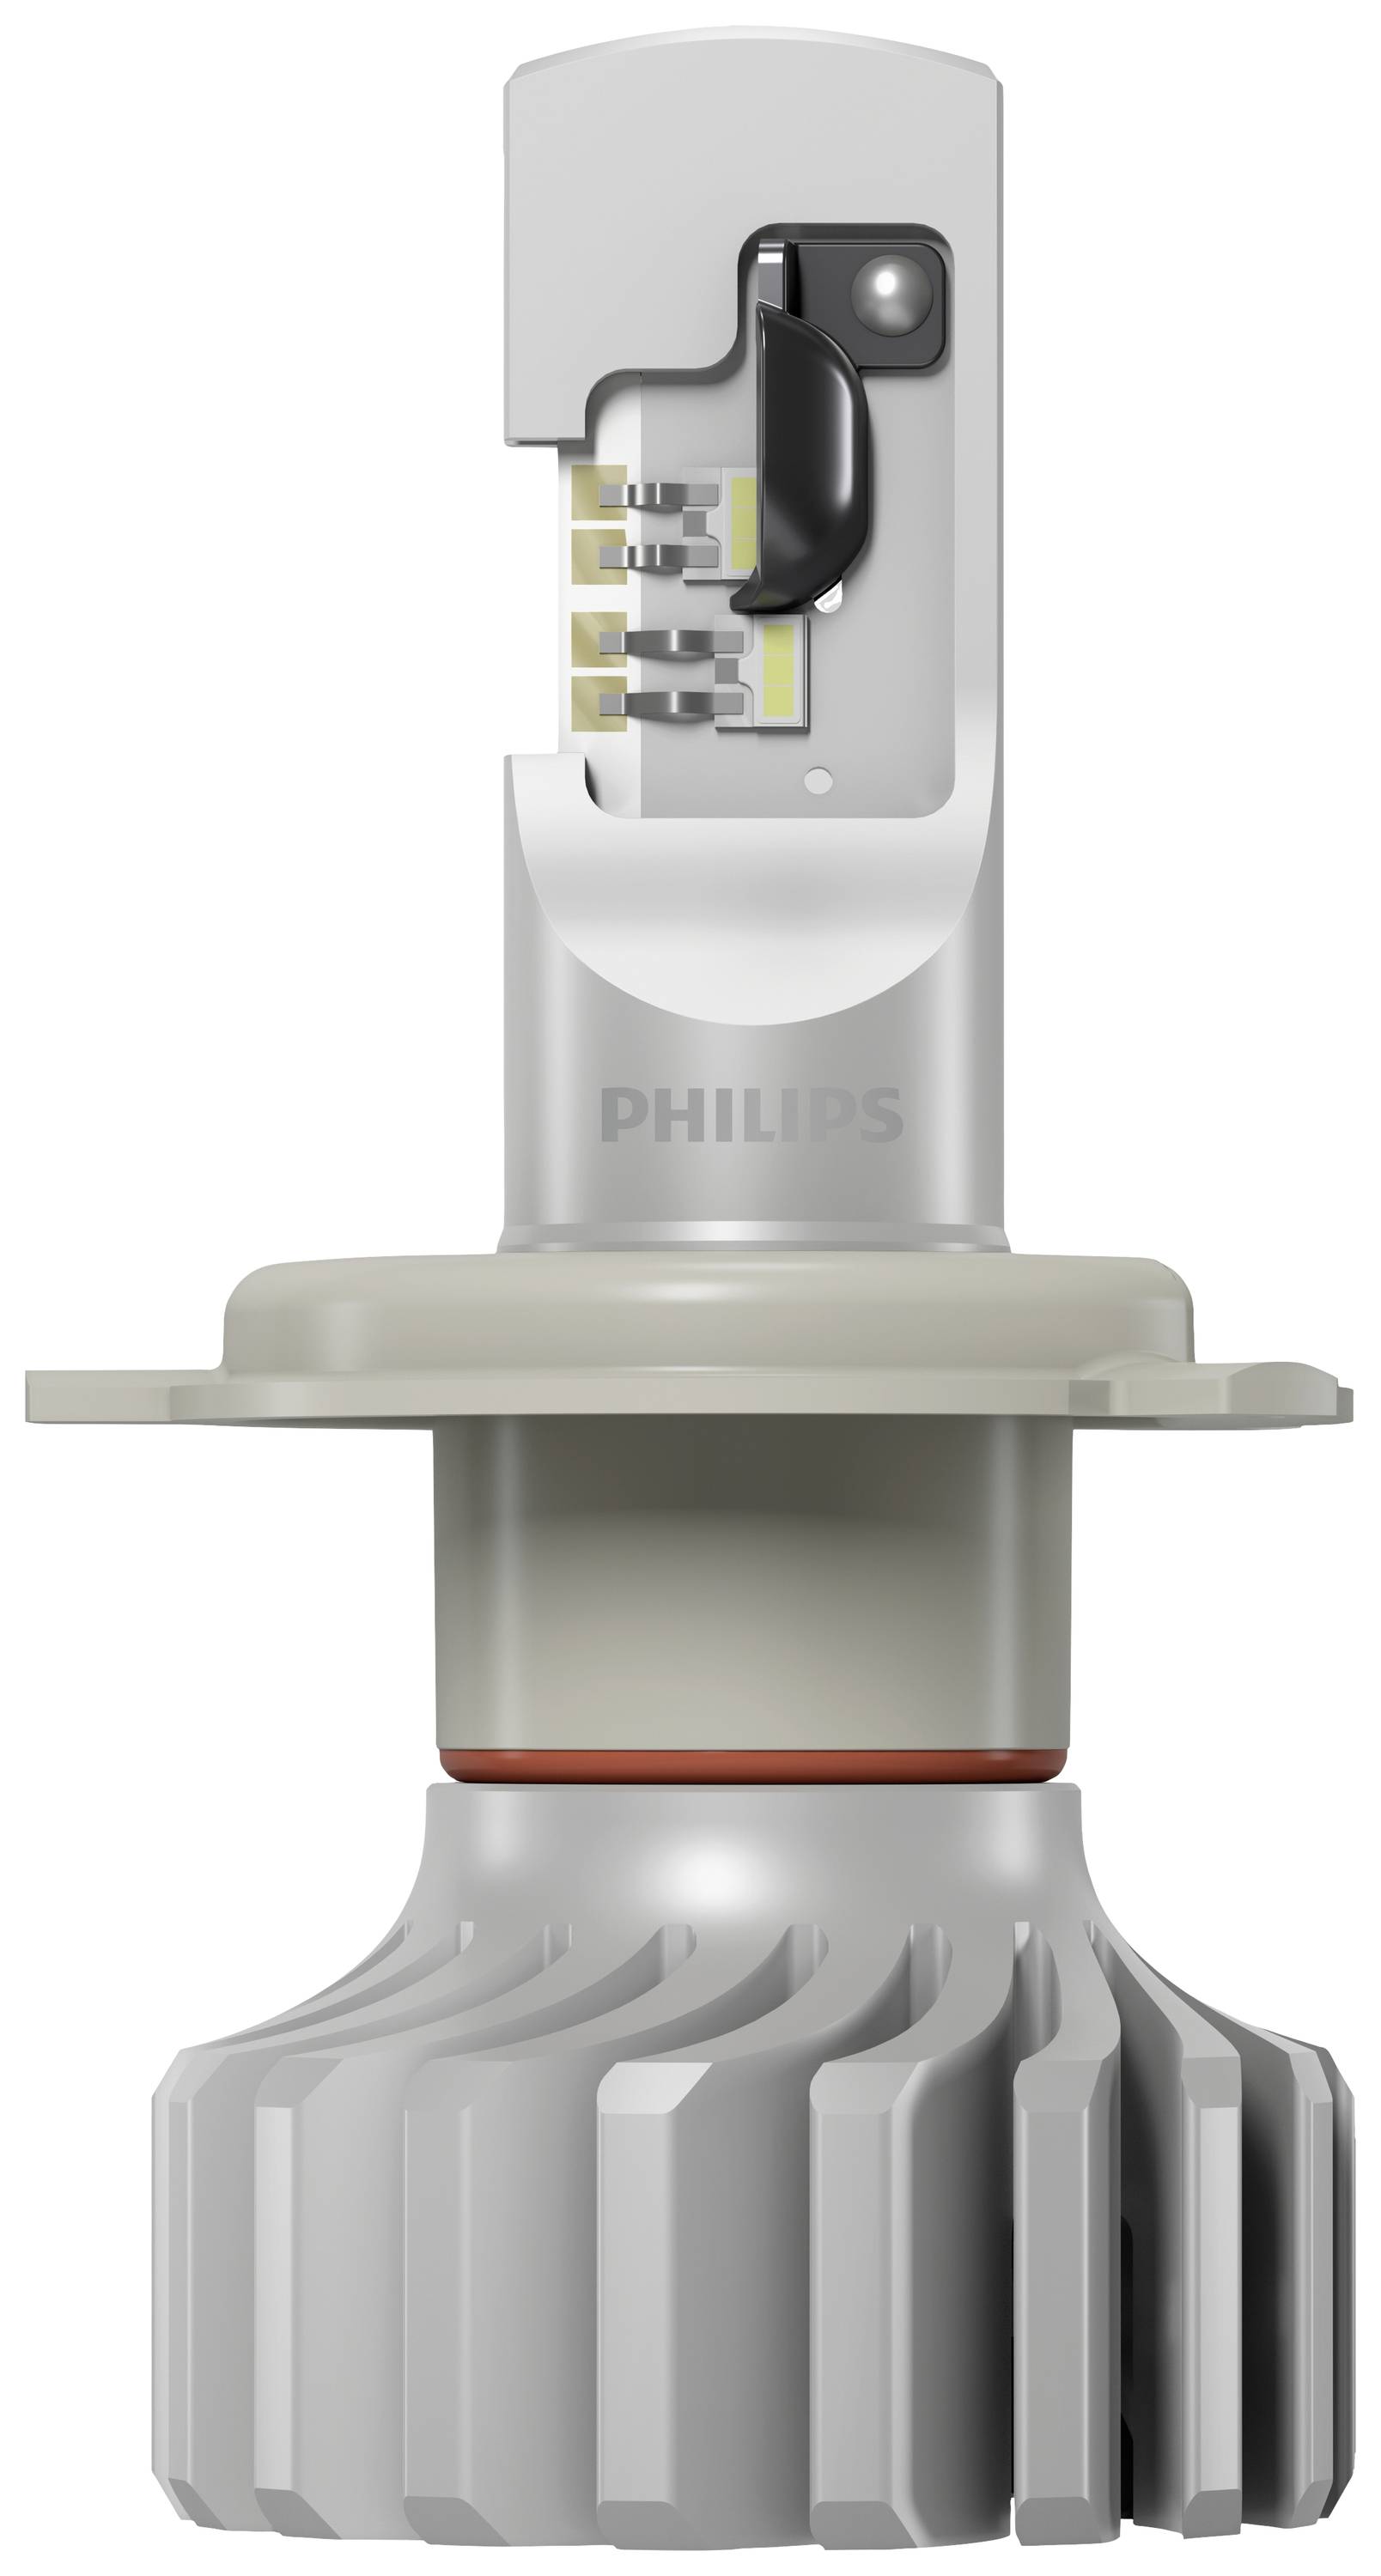 Philips Ultinon Pro6000 H4-LED: Endlich: Legale H4-LED-Lampen von Philips -  News - VAU-MAX - Das kostenlose Performance-Magazin